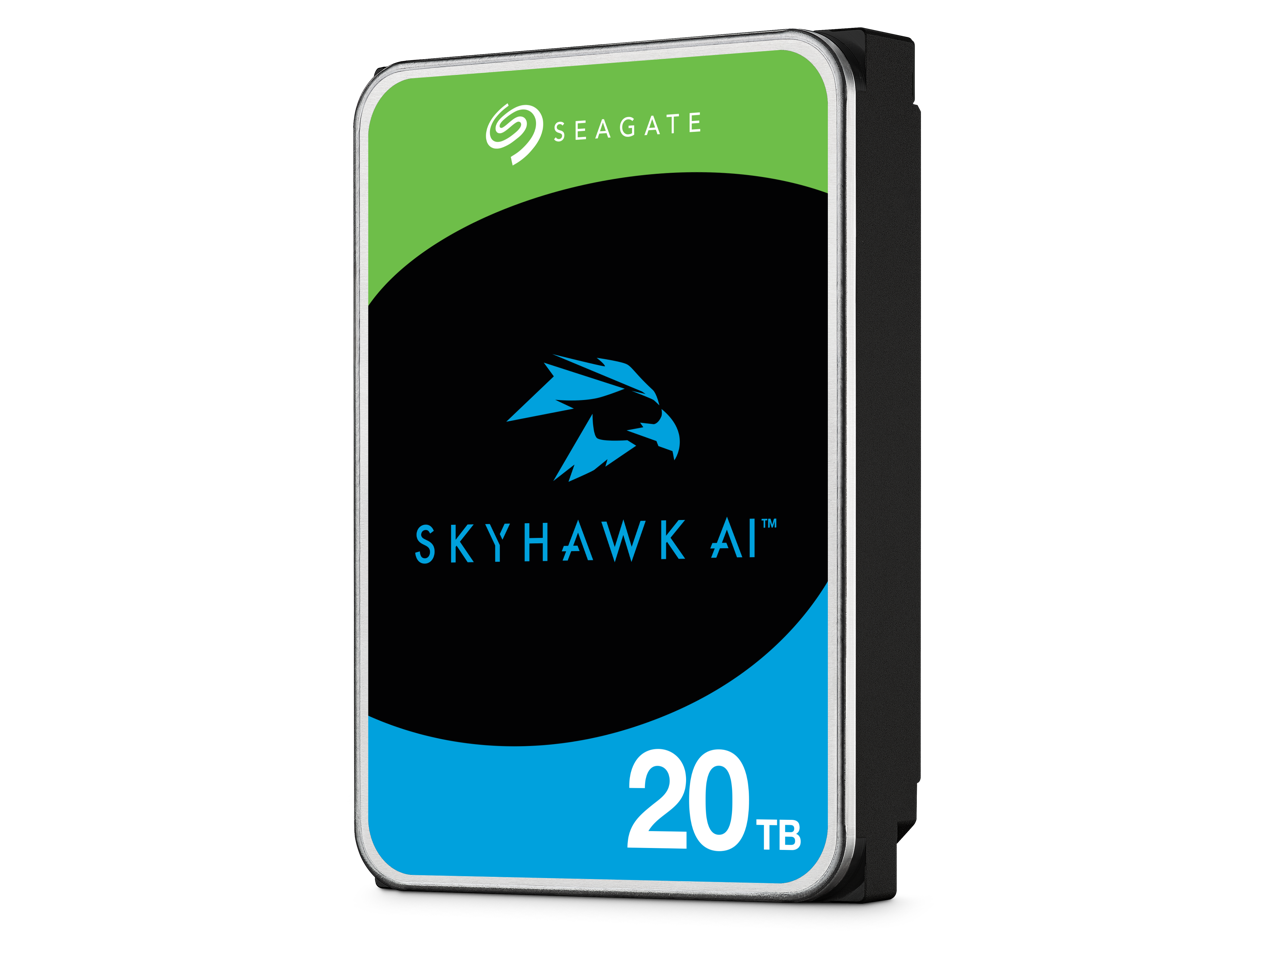 Seagate SkyHawk AI ST20000VE002 20TB 7200 RPM 256MB Cache SATA 6.0Gb/s 3.5" Internal Hard Drive - image 2 of 4